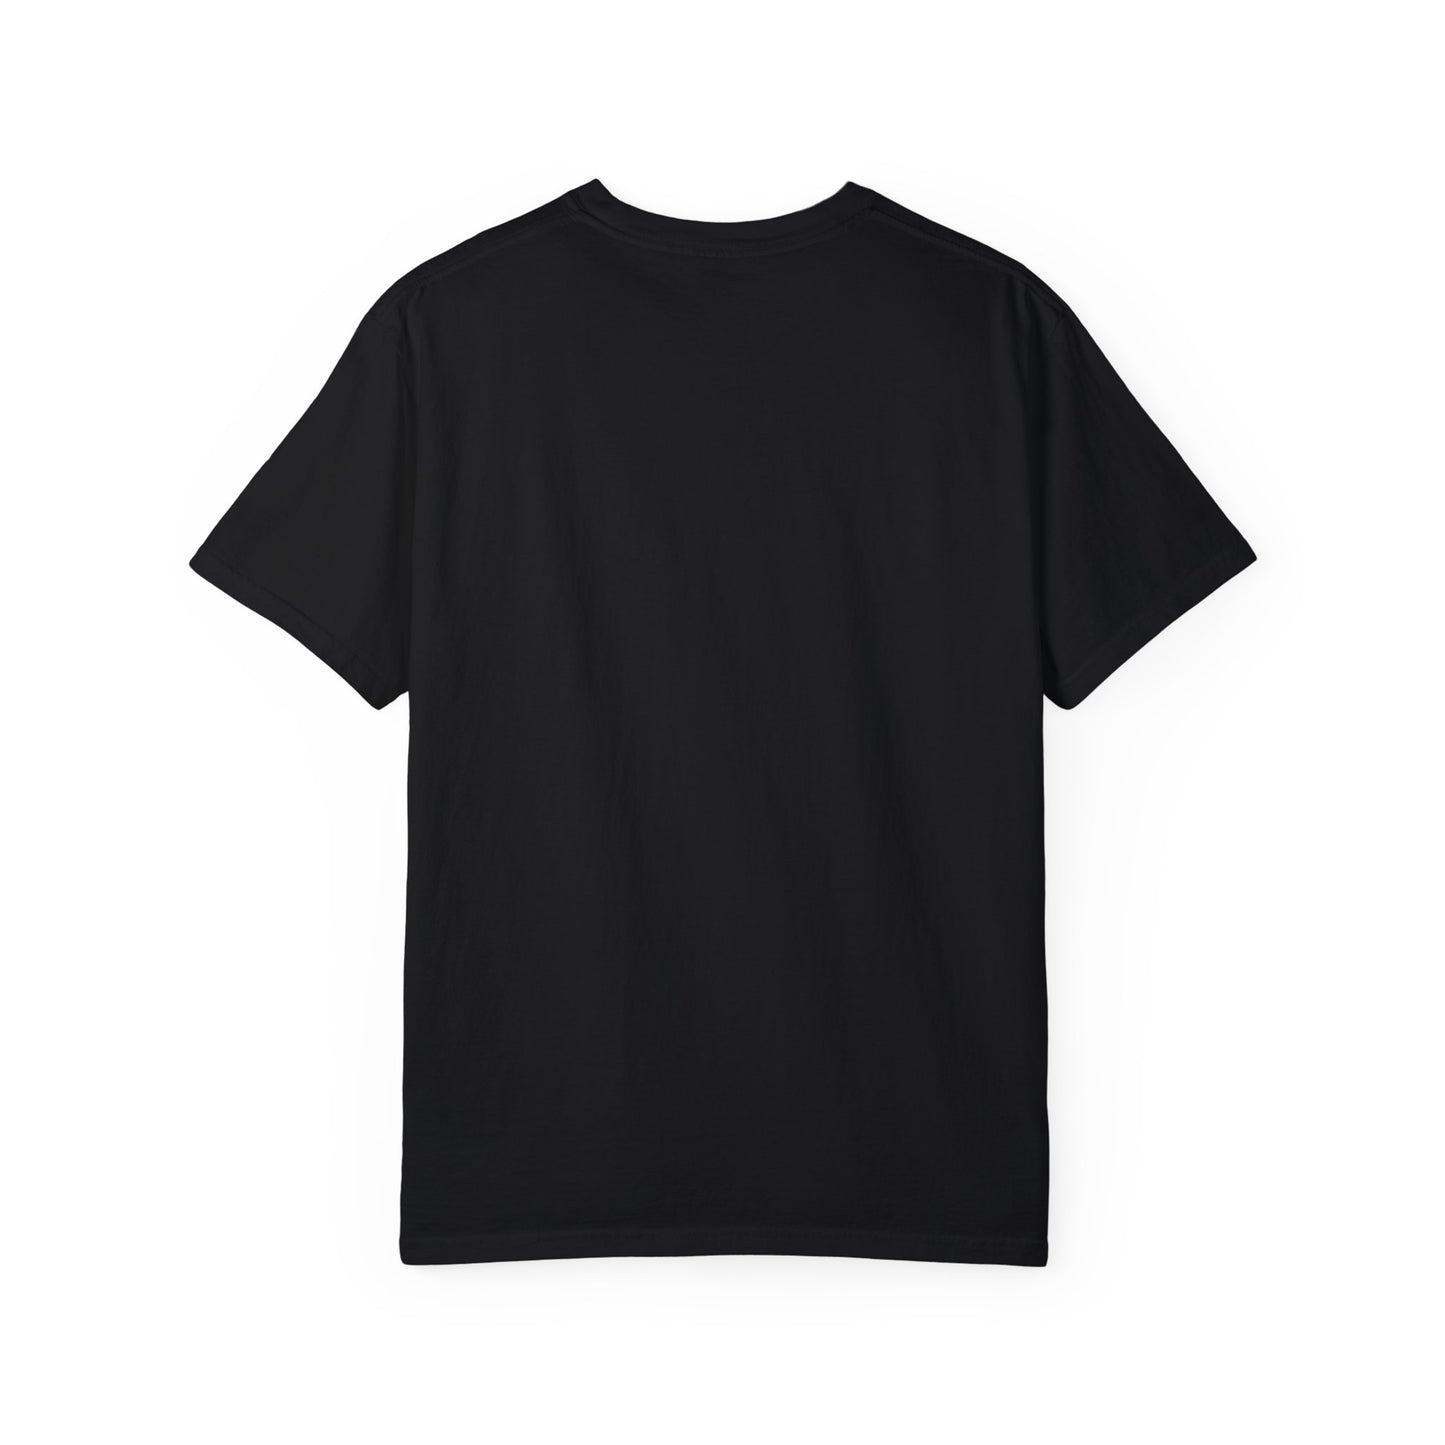 Hustle Hard Tee (Unisex Garment-Dyed T-shirt)